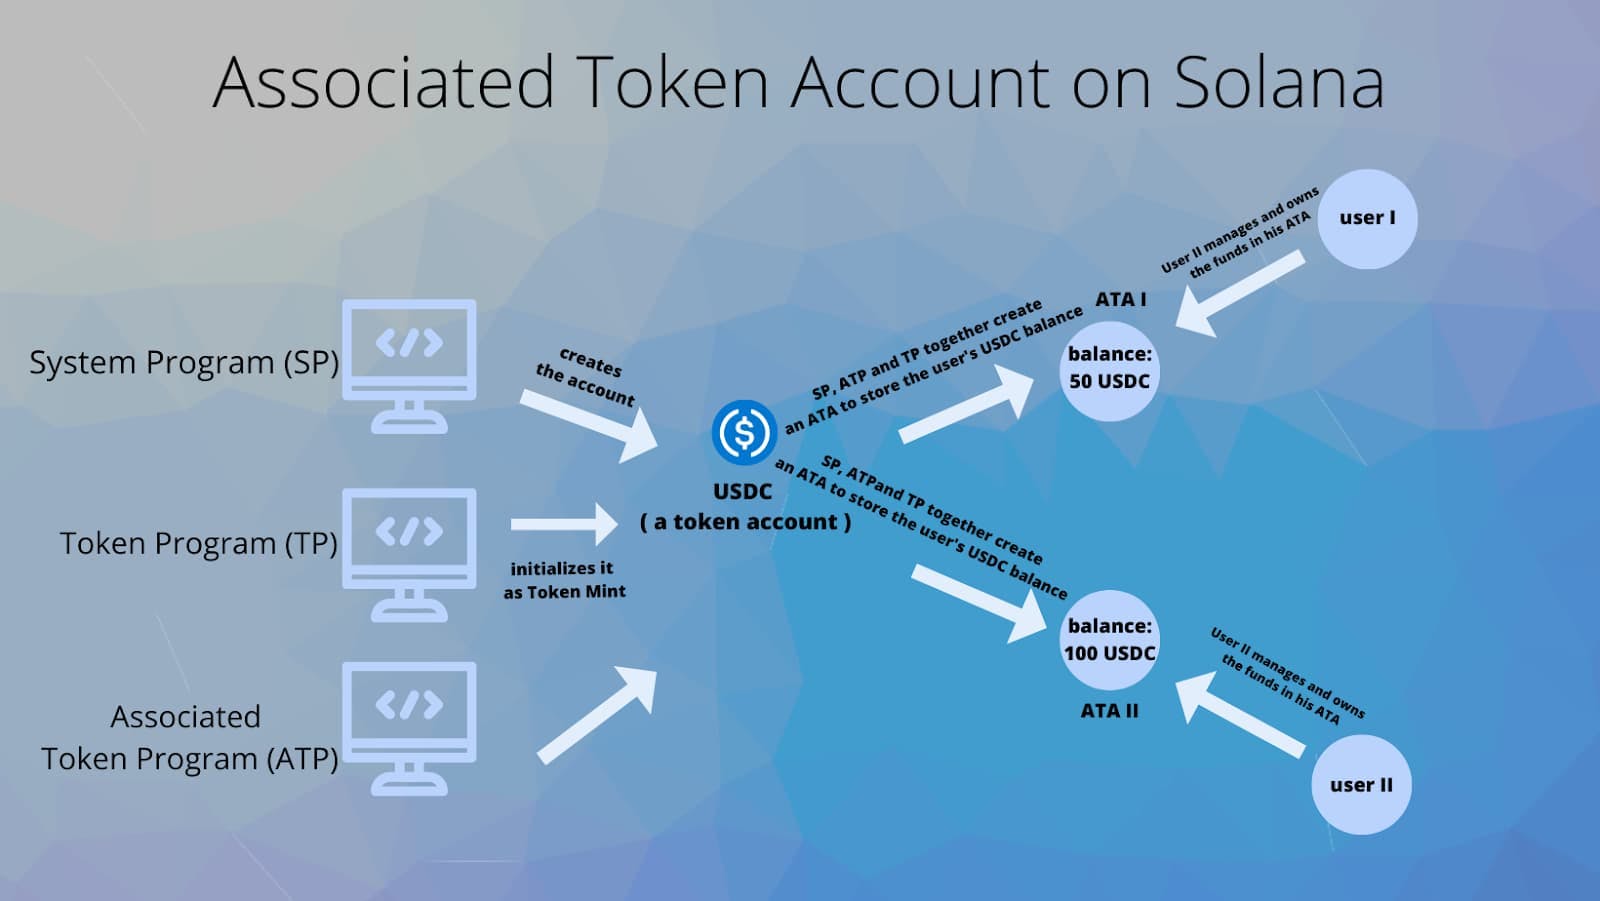 Associated Token Account on Solana